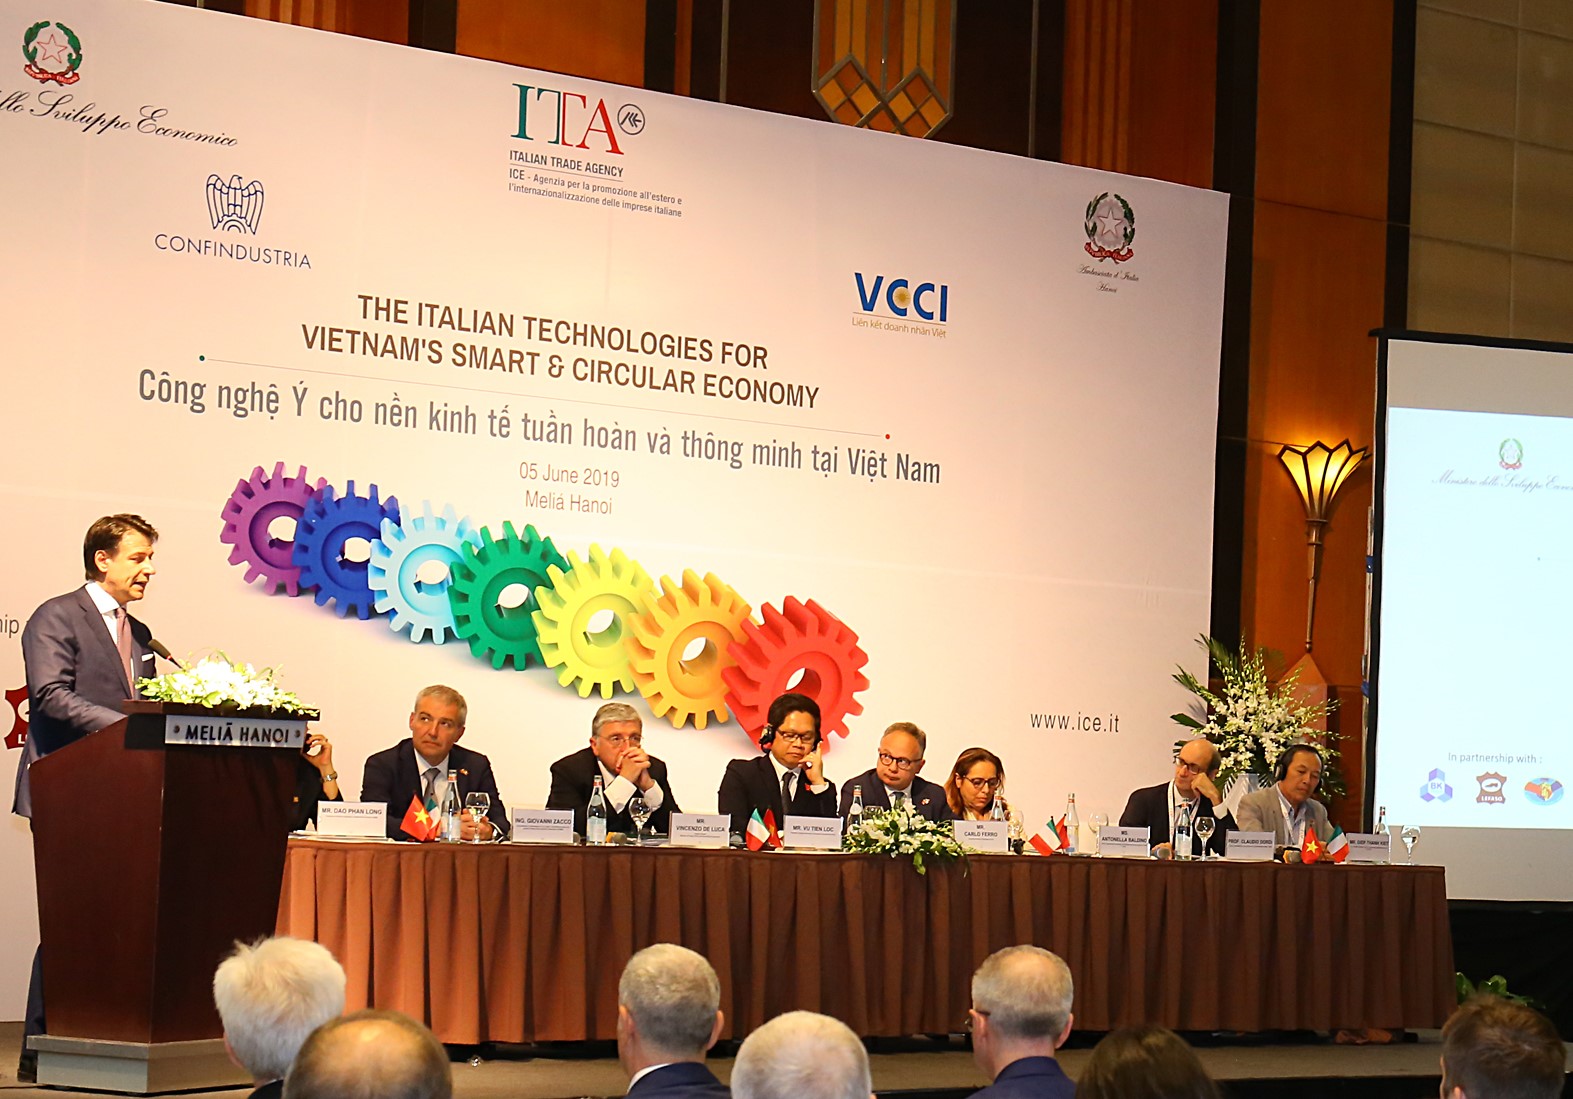 Prime Minister of Italy Giuseppe Conte at ITA's Forum in Hanoi, June 5, 2019